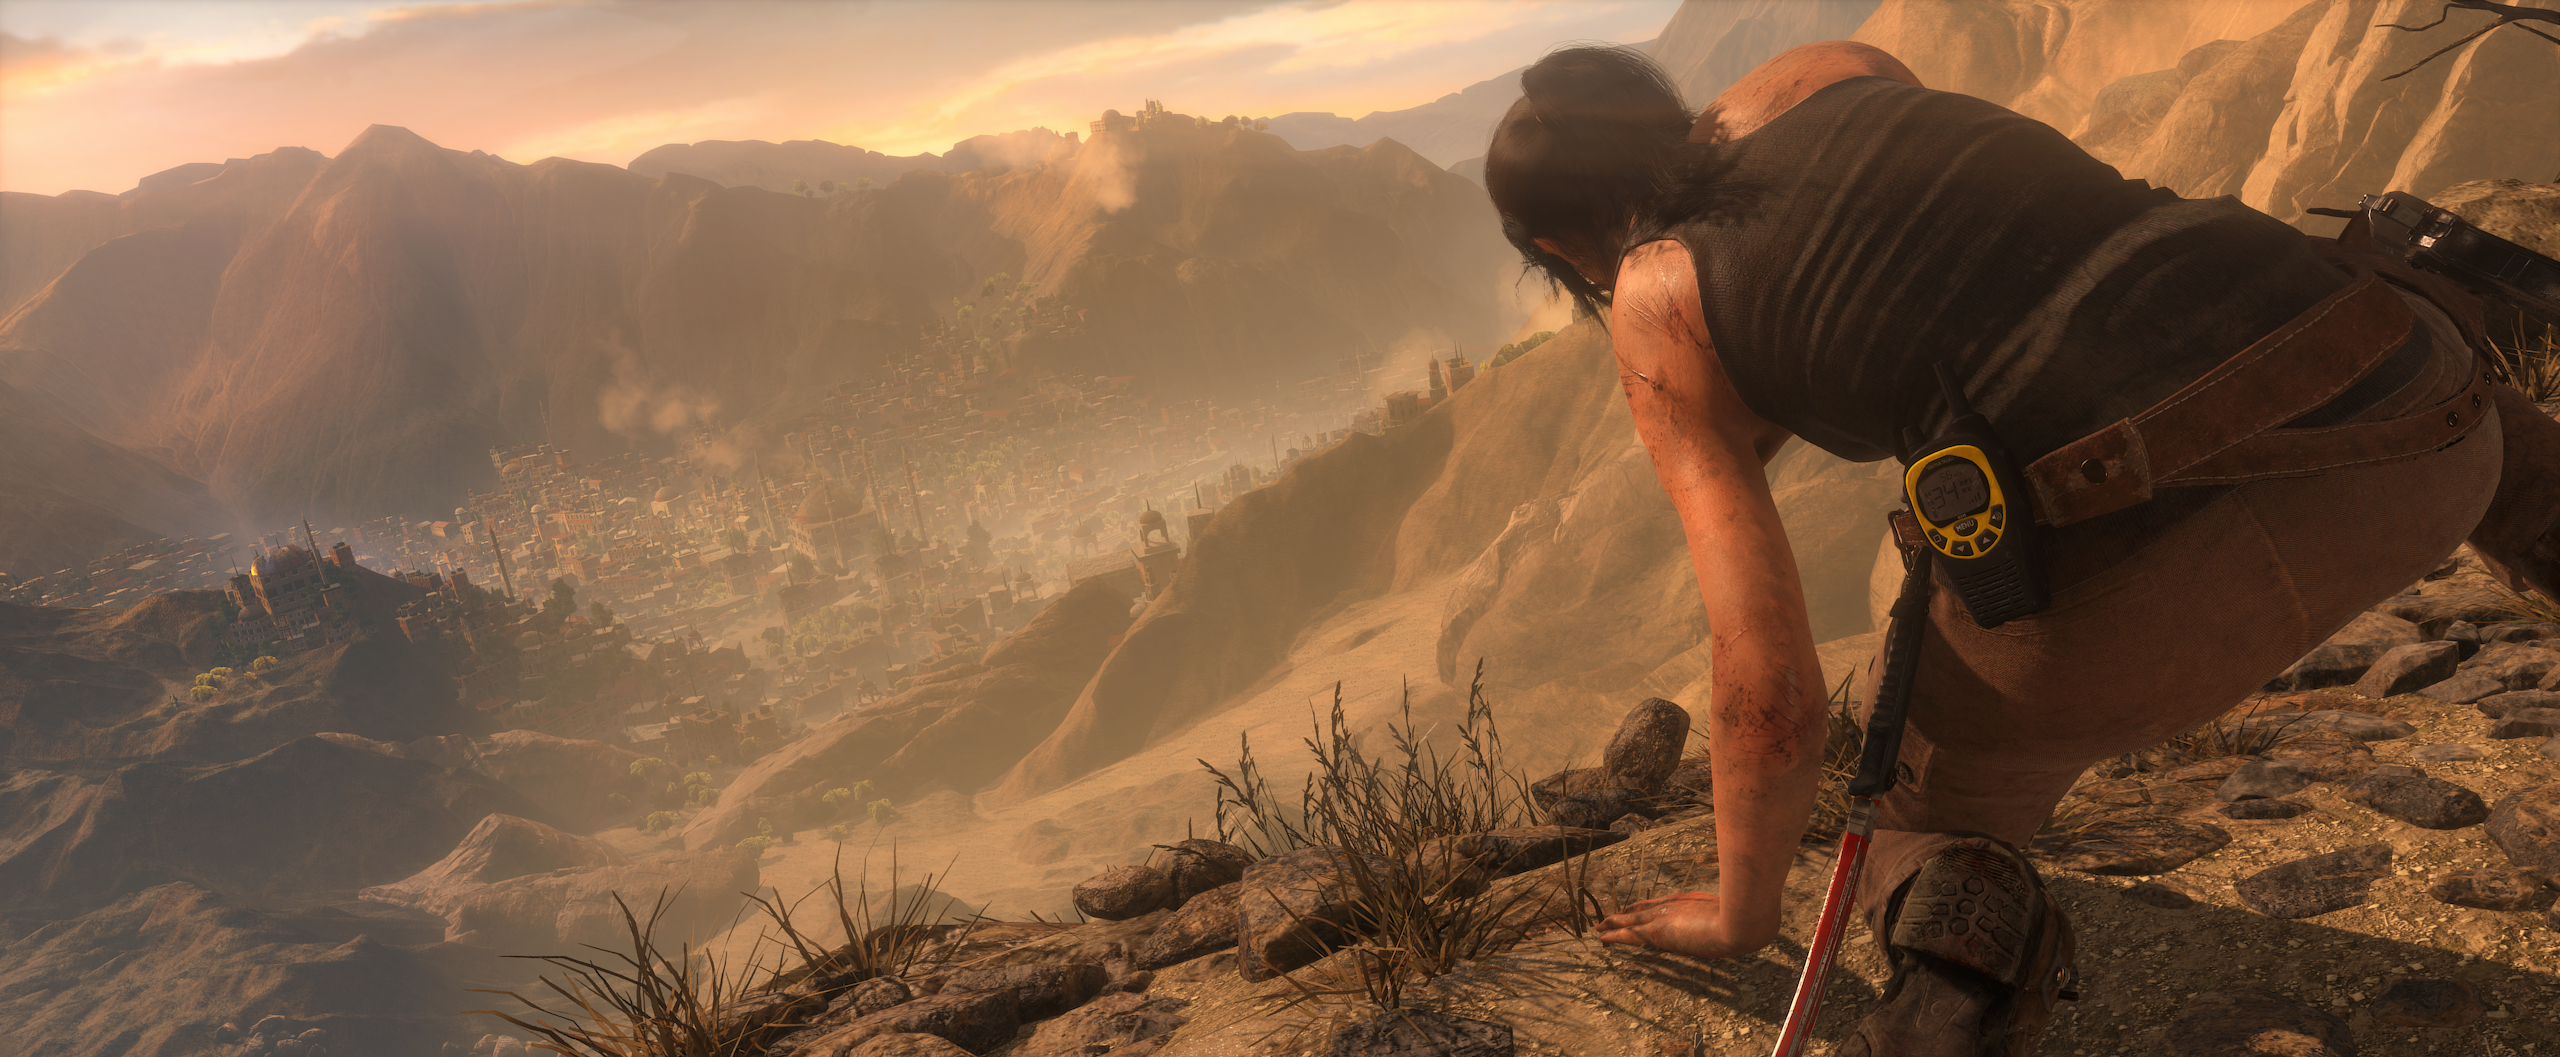 General 2560x1057 Tomb Raider Rise of the Tomb Raider Lara Croft (Tomb Raider) video games video game landscape screen shot PC gaming